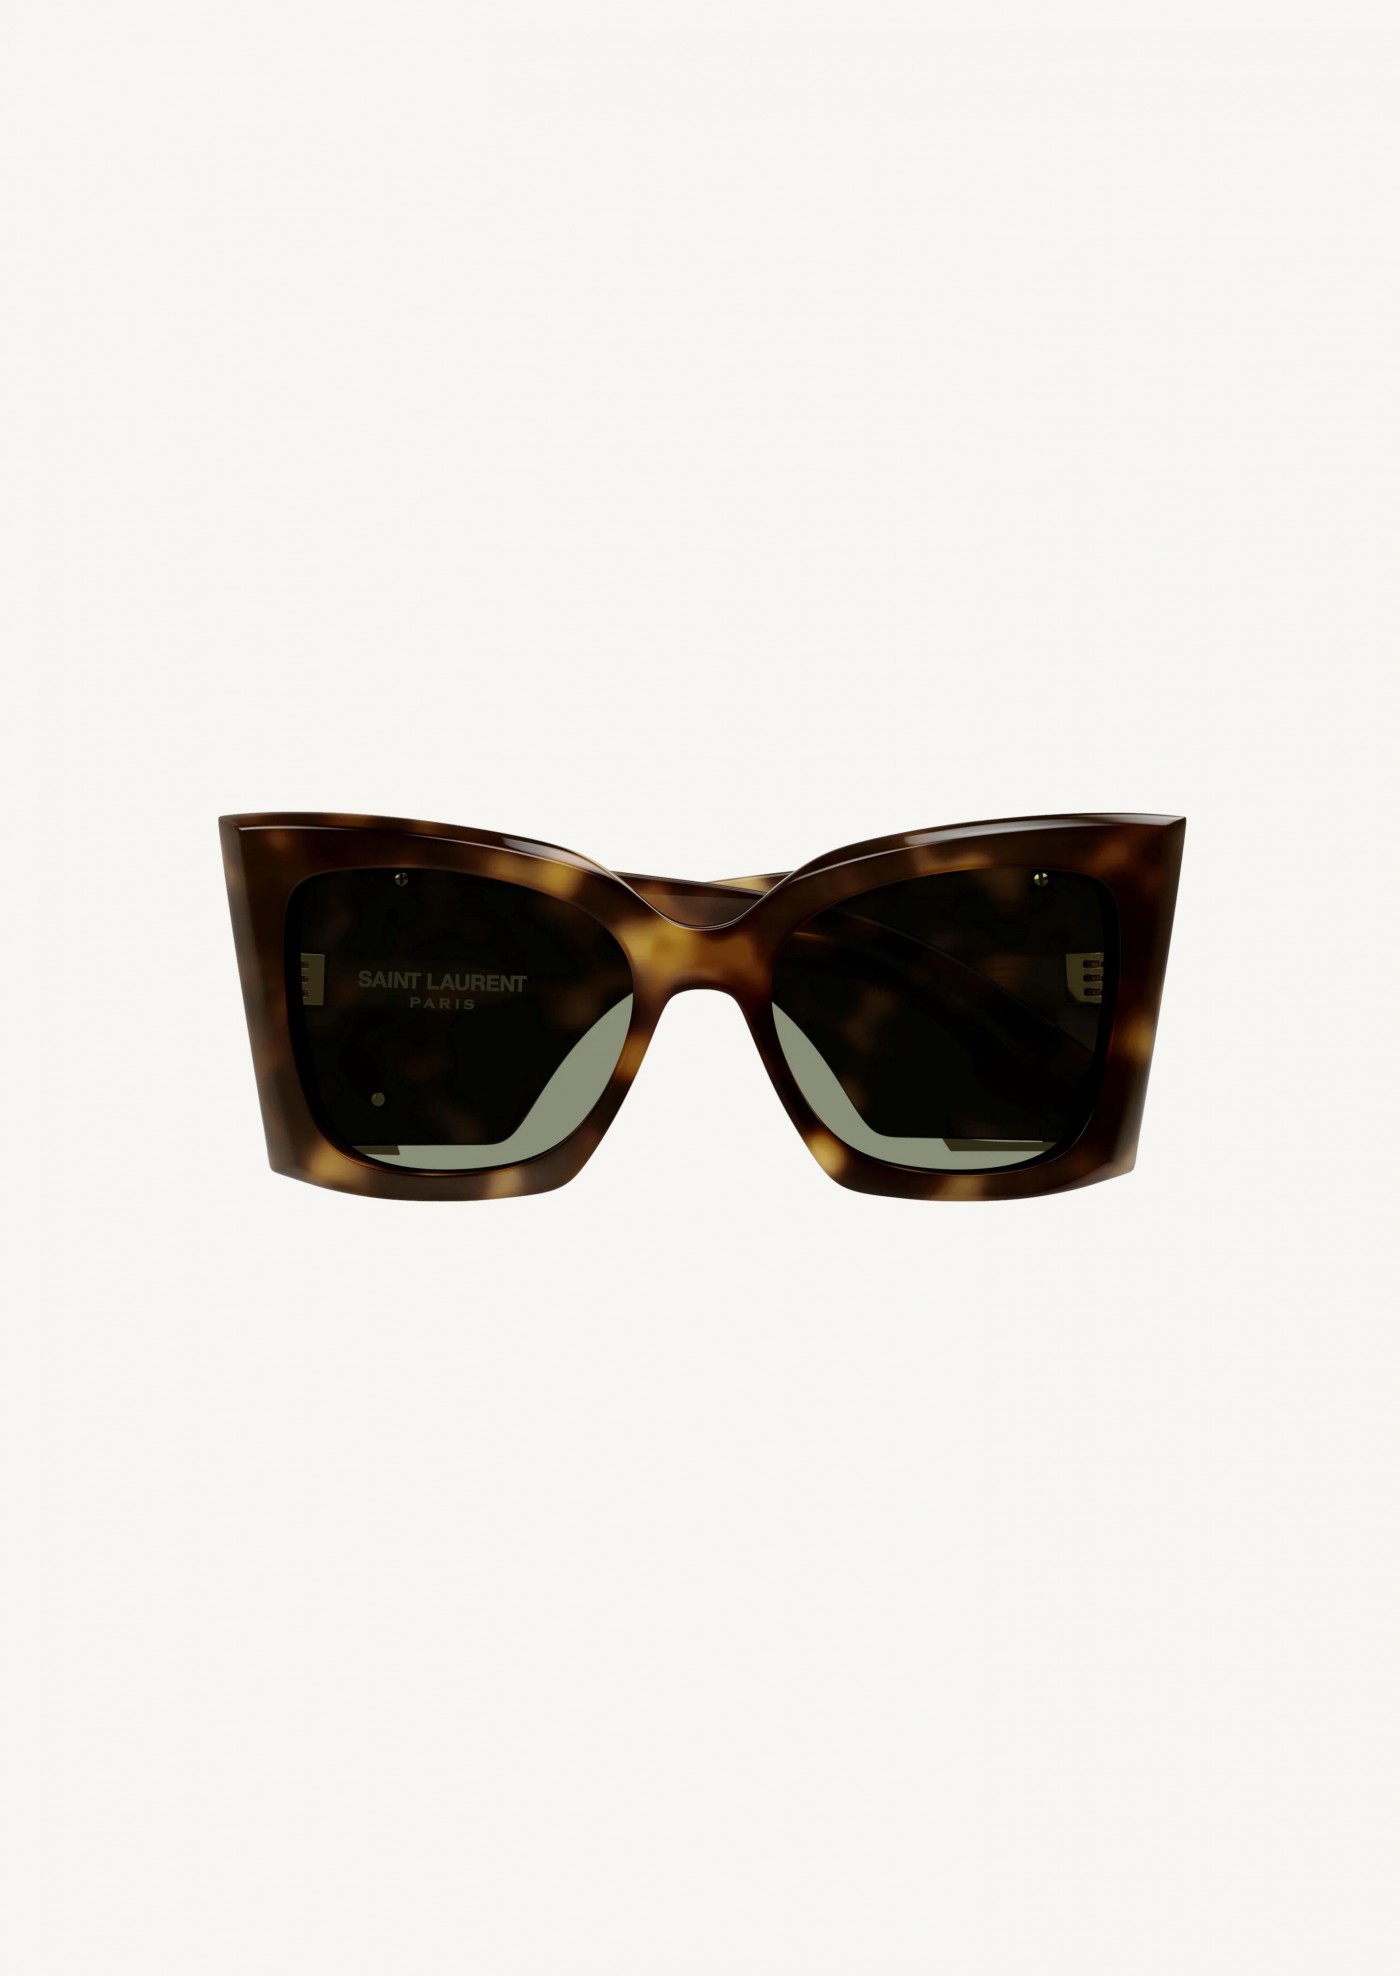 Sunglasses SL M119 Blaze brown